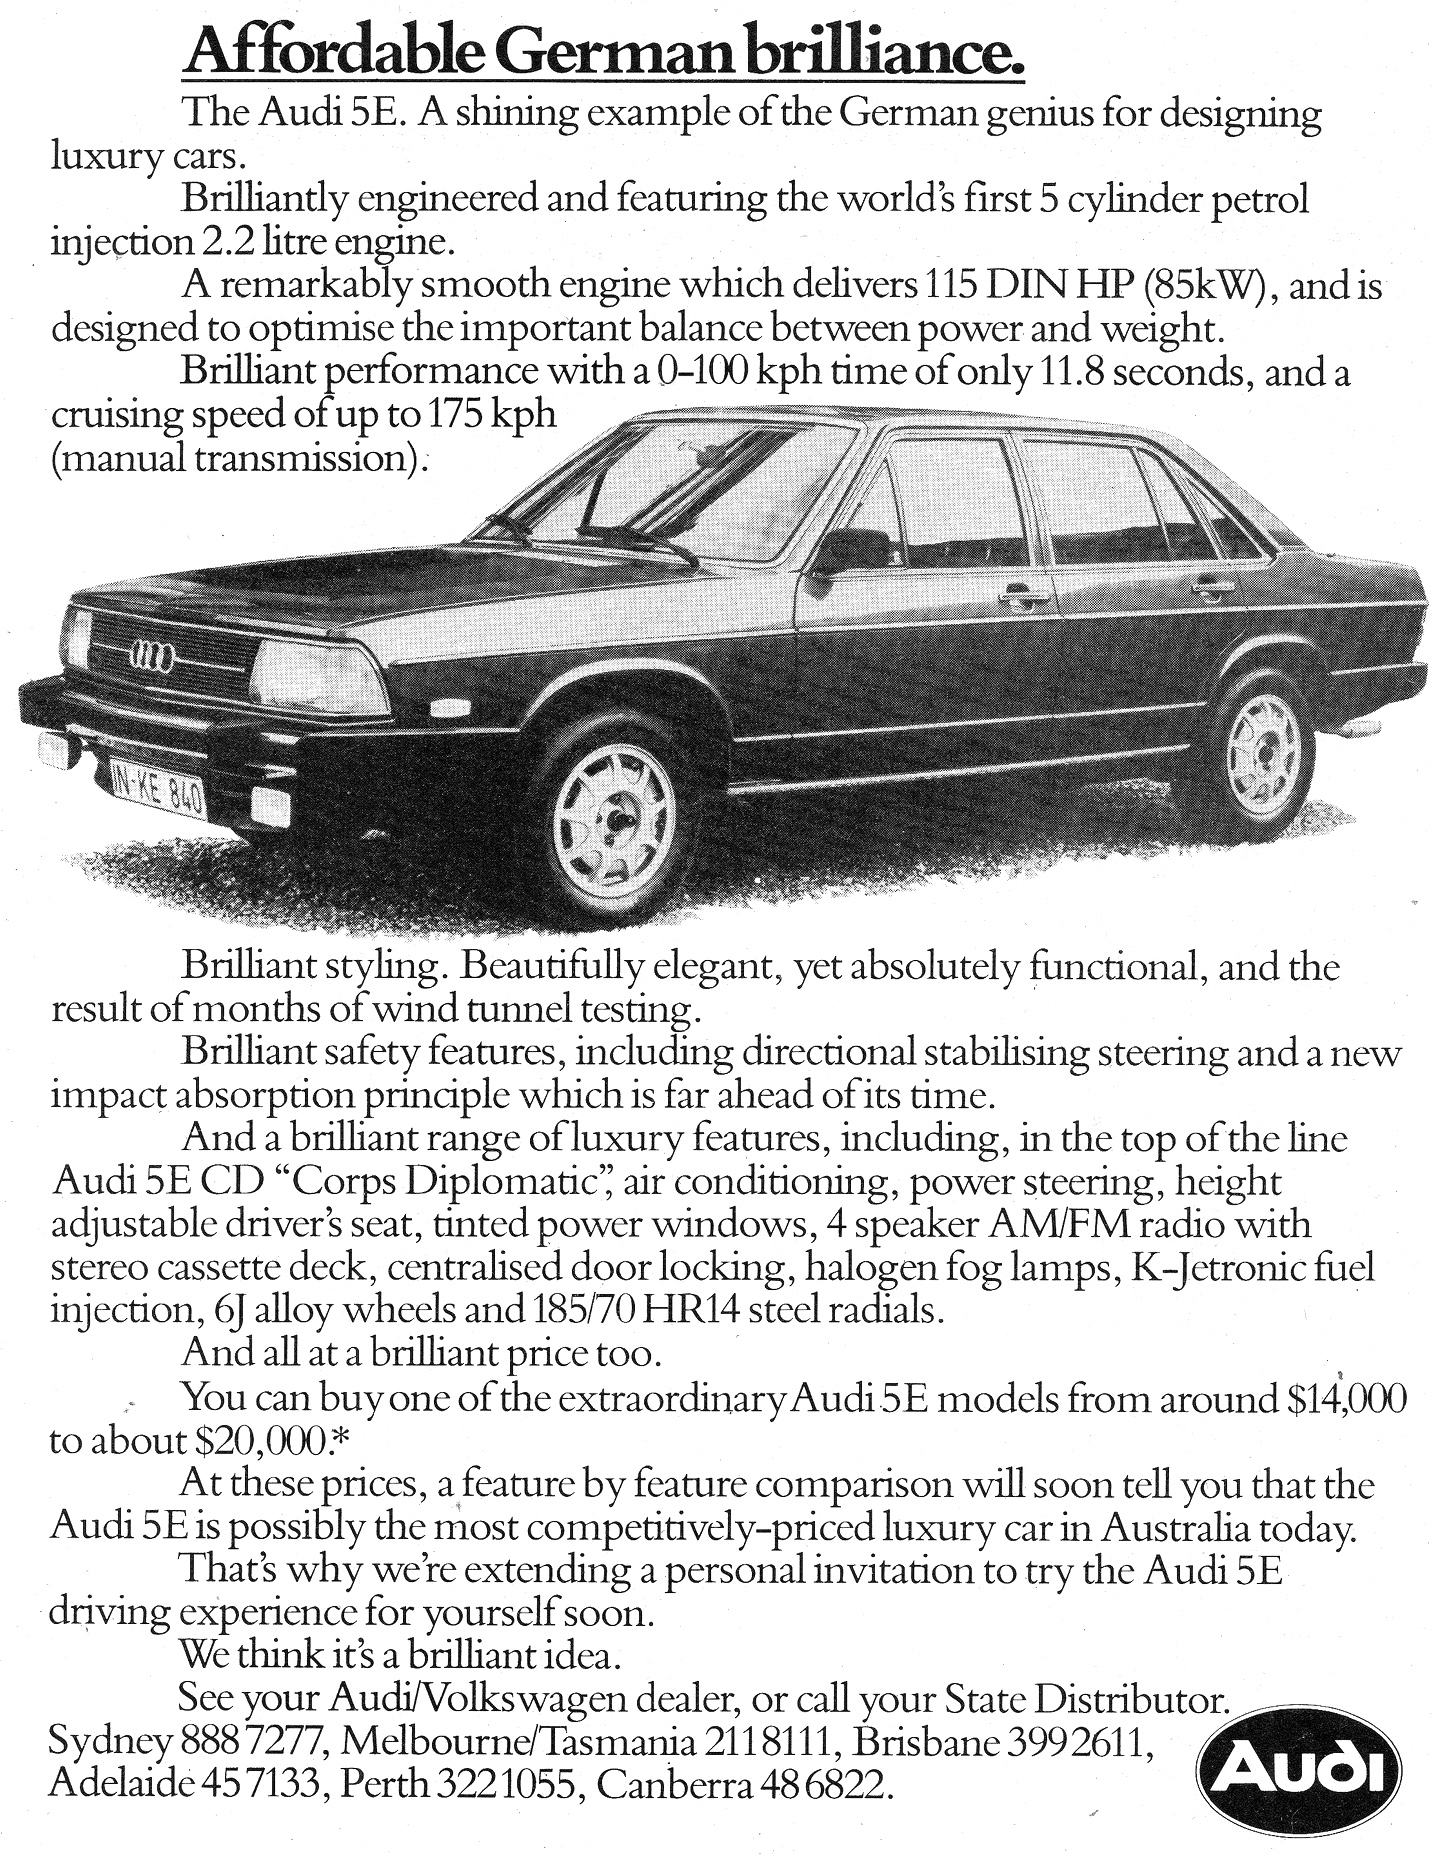 1978 Audi 5E 5 Cylinder & 5E CD Corps Diplomatic